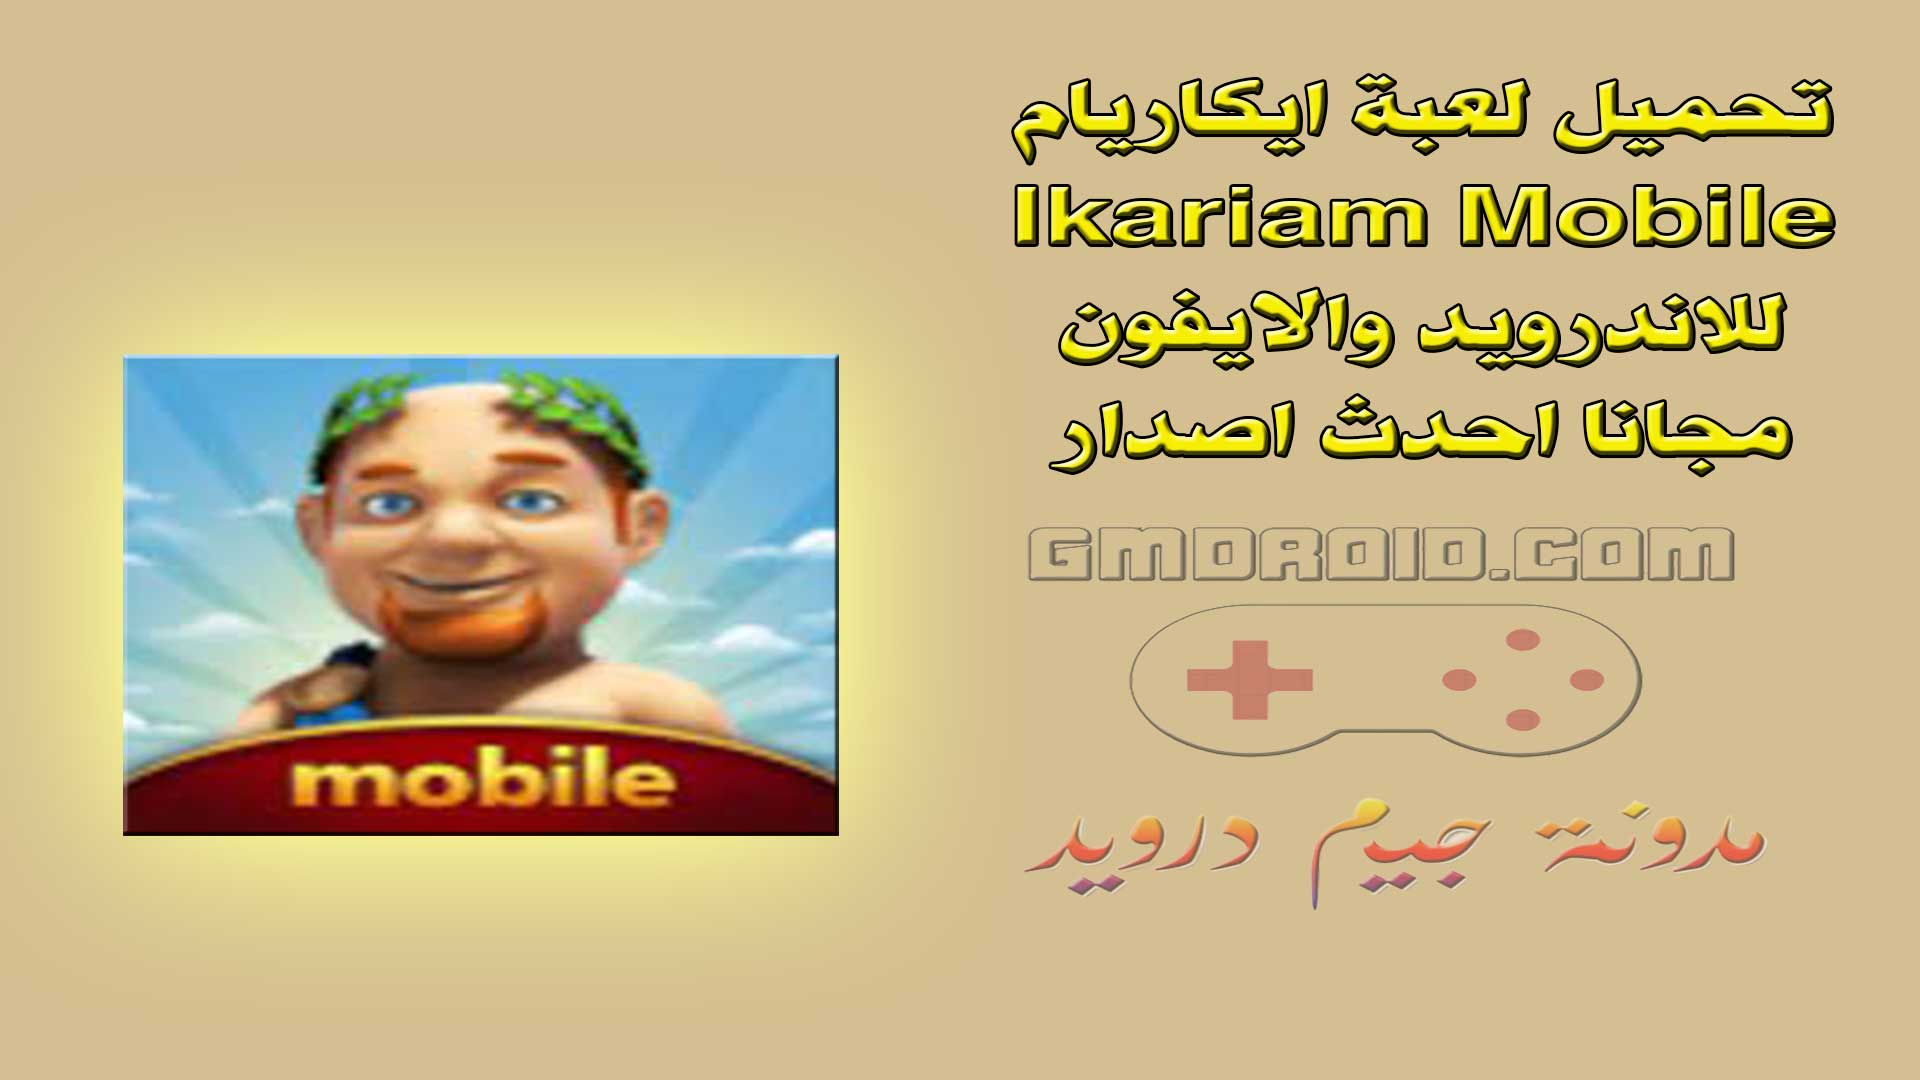 تحميل لعبة ايكاريام Ikariam Mobile للاندرويد والايفون مجانا احدث اصدار